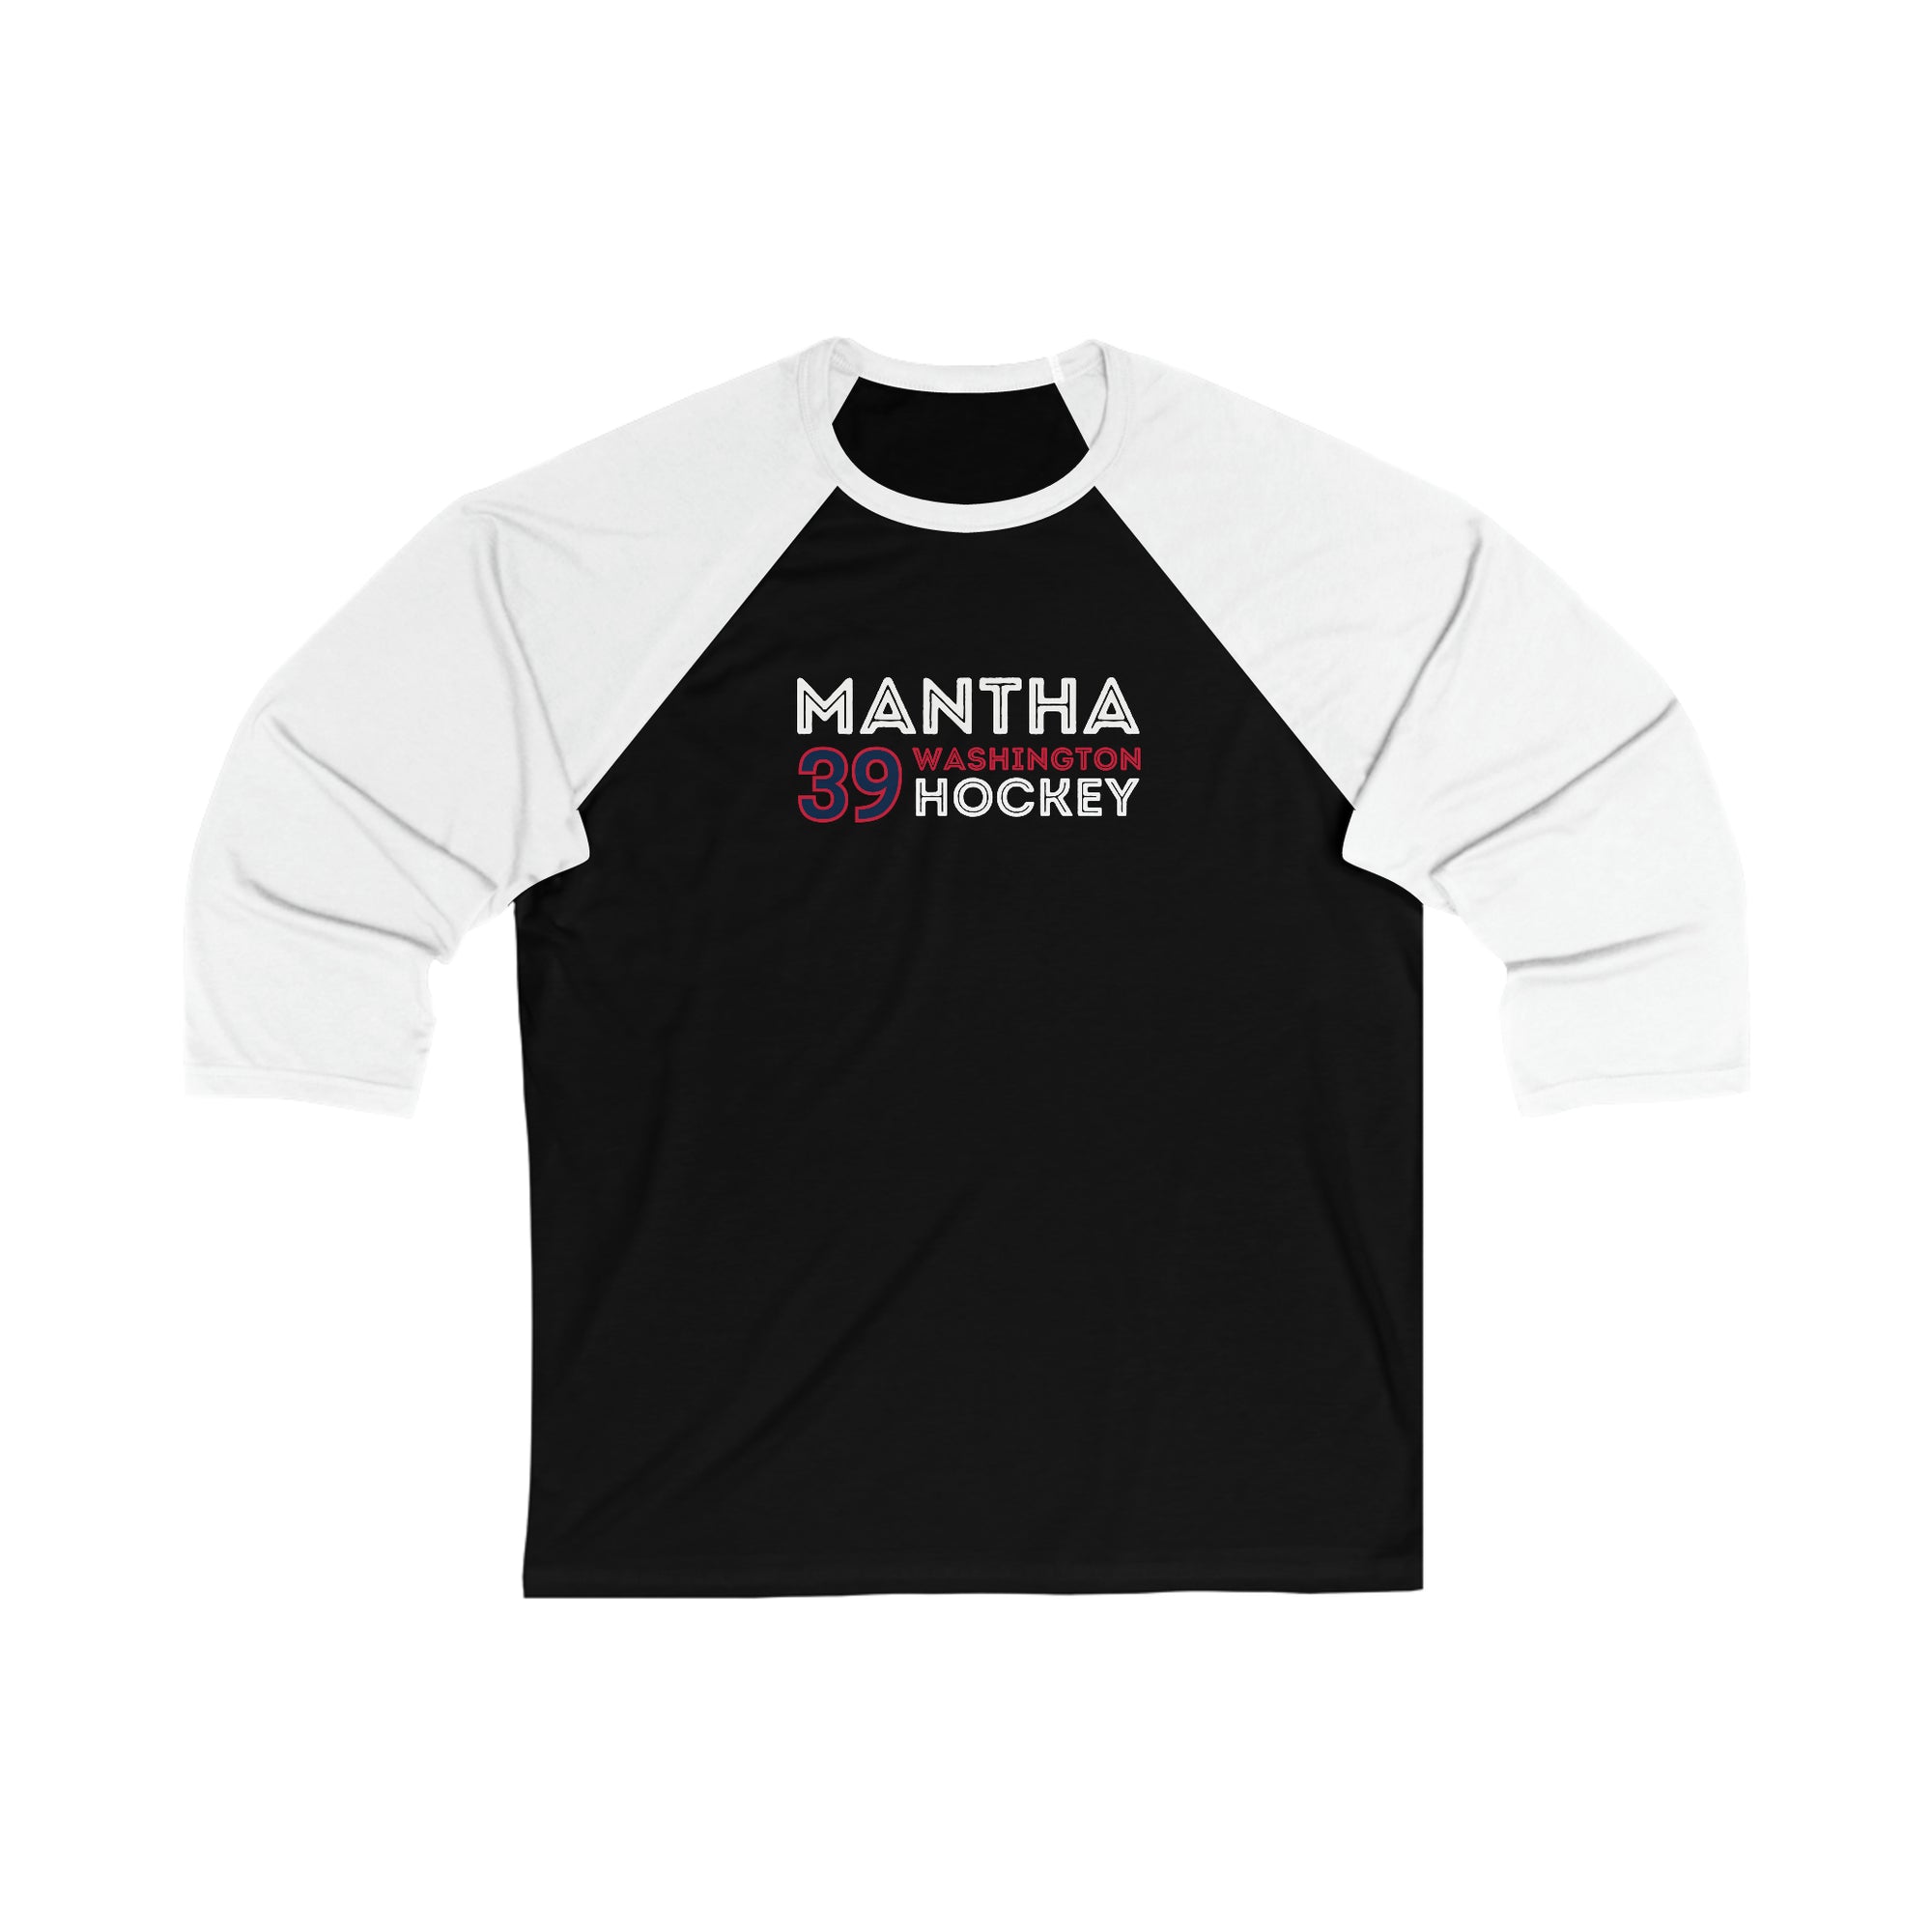 Mantha 39 Washington Hockey Grafitti Wall Design Unisex Tri-Blend 3/4 Sleeve Raglan Baseball Shirt